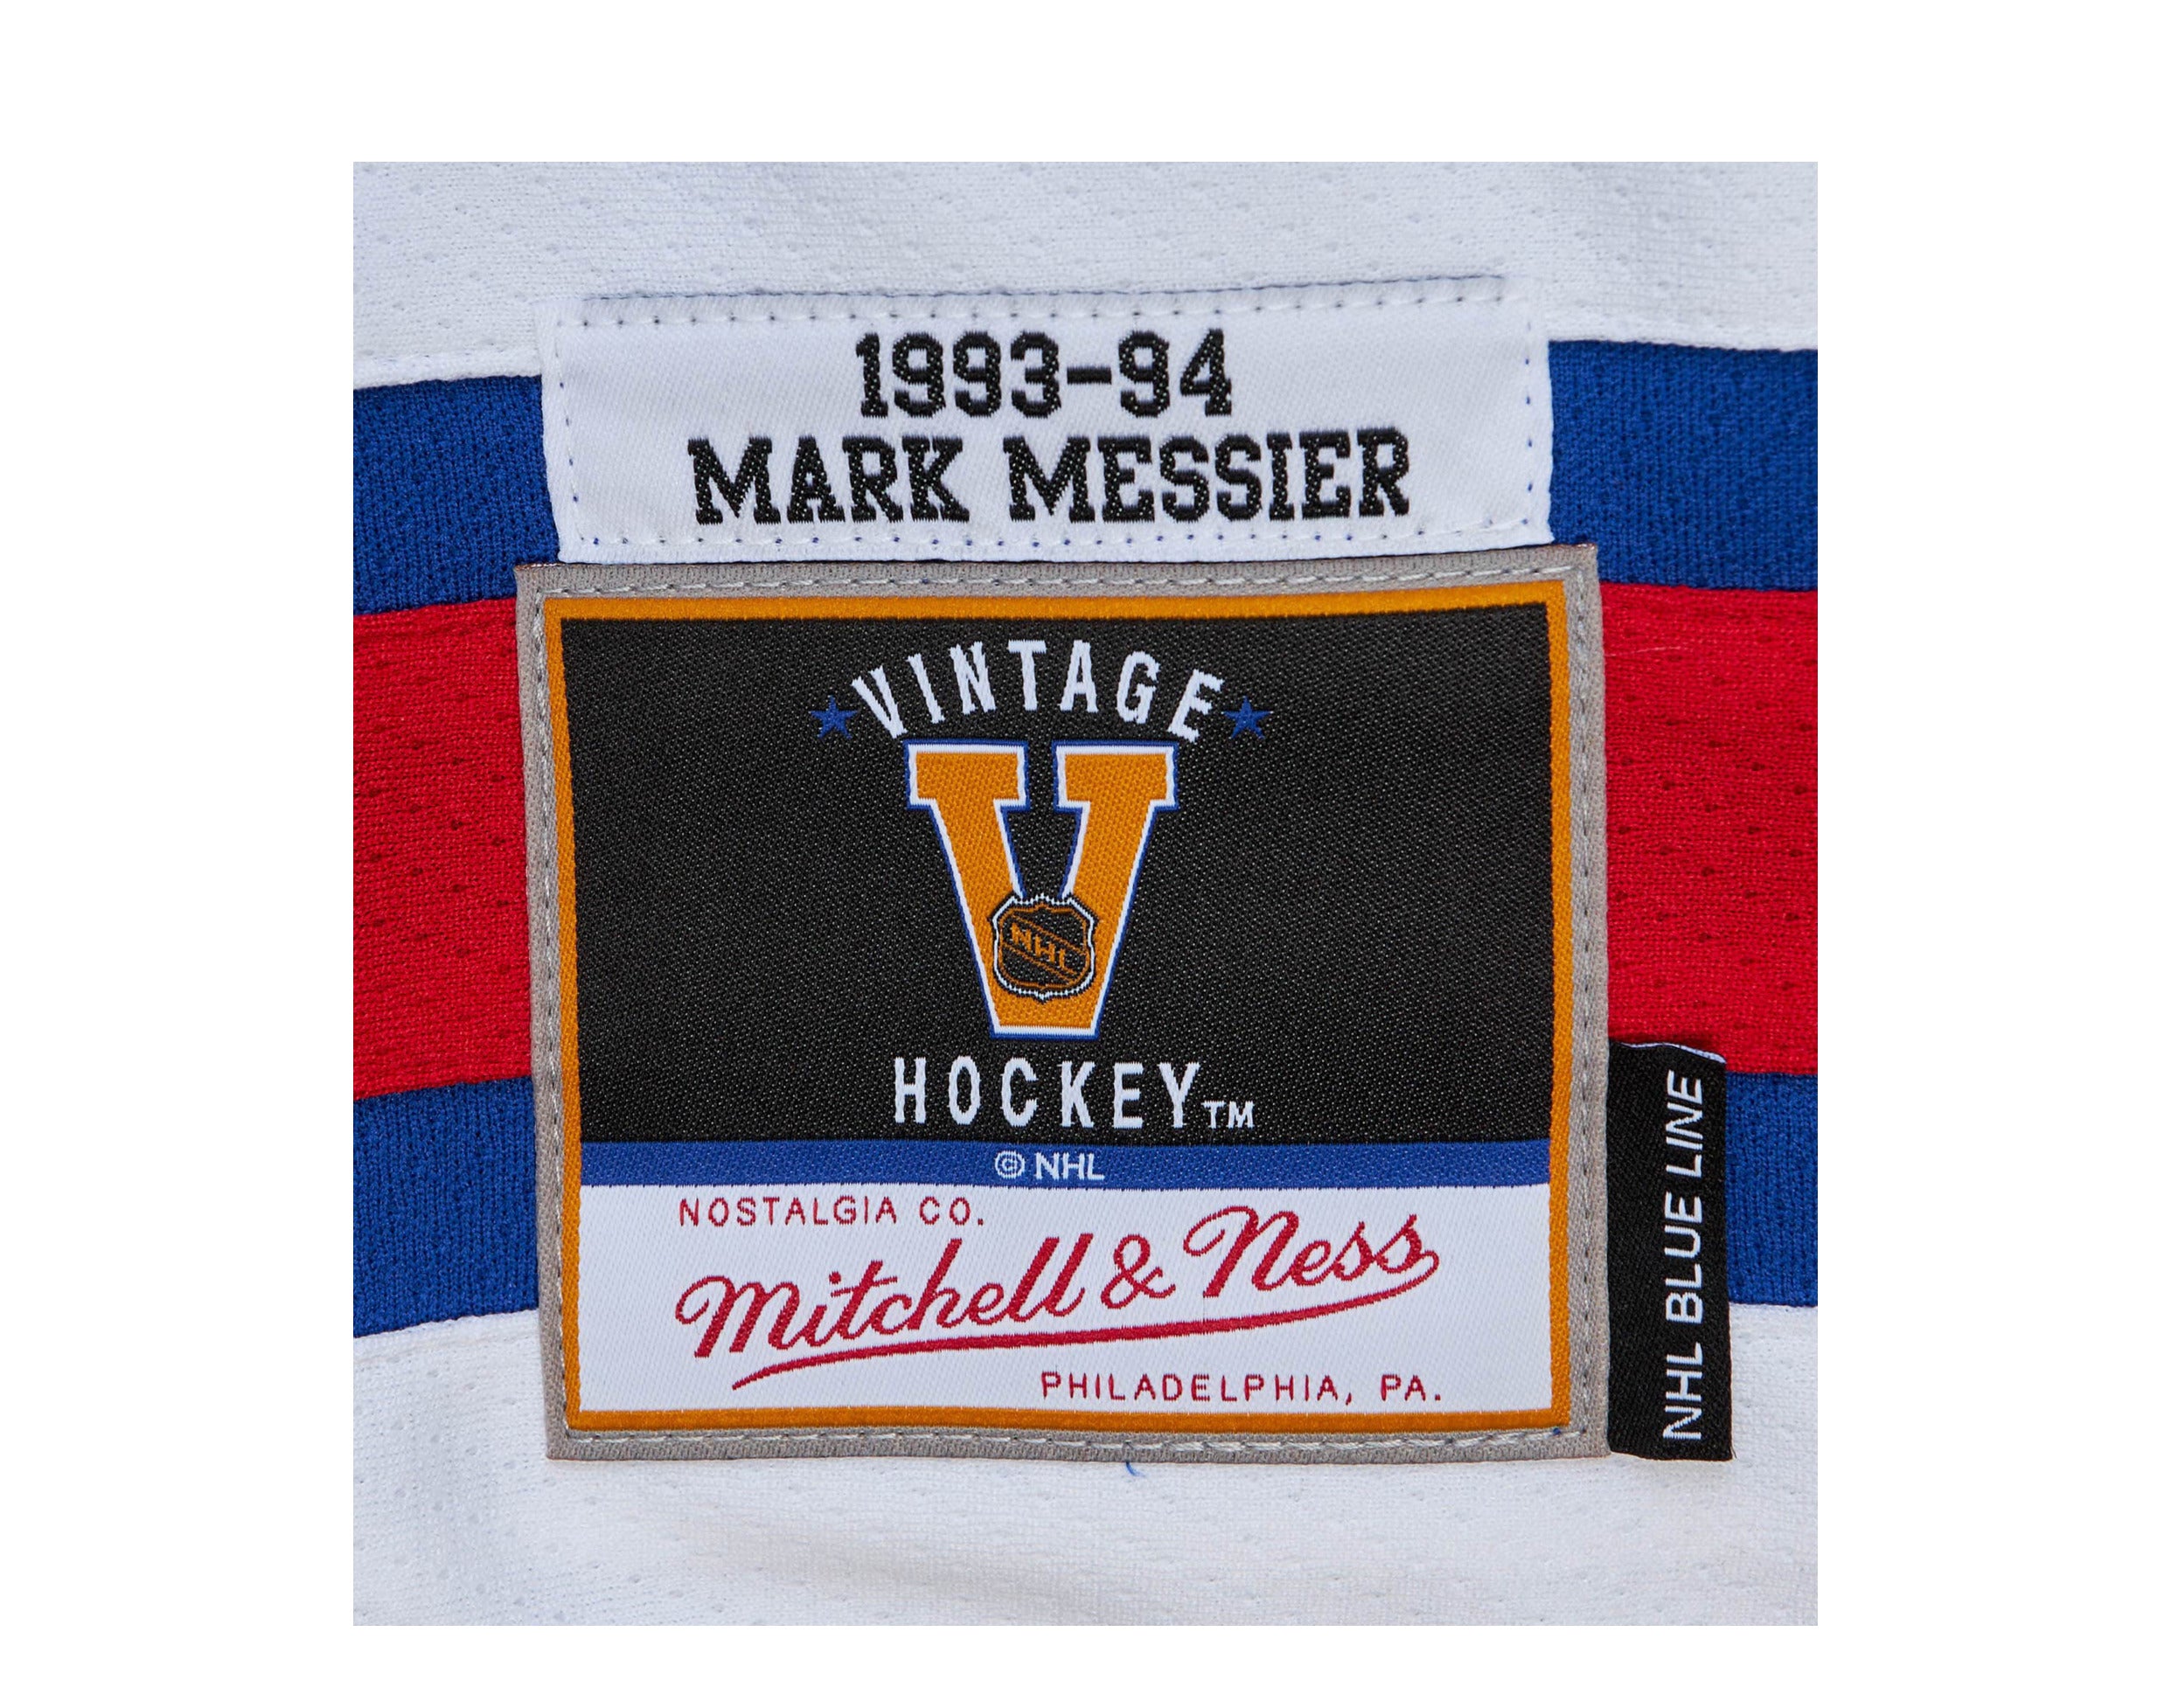 Vintage New York Rangers Mark Messier Jersey.